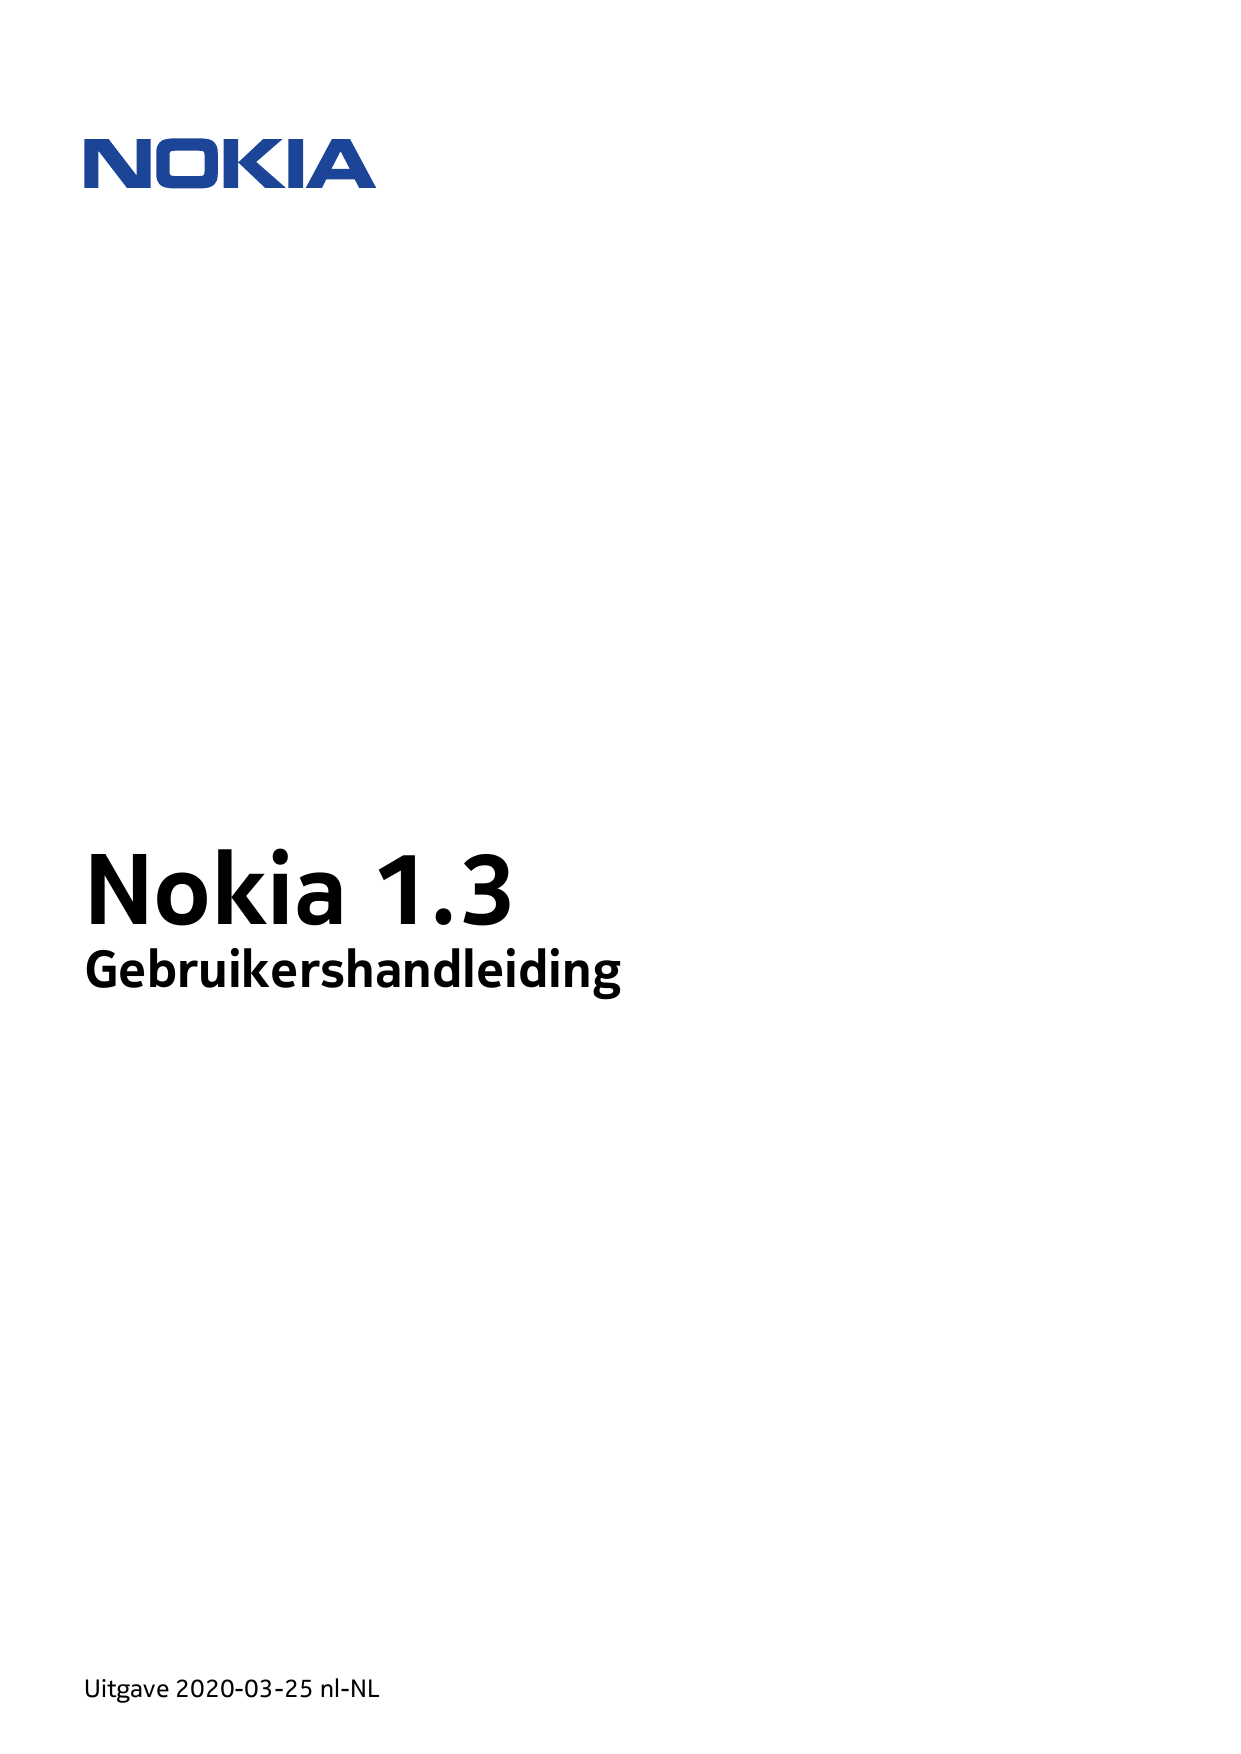 Nokia 1.3GebruikershandleidingUitgave 2020-03-25 nl-NL